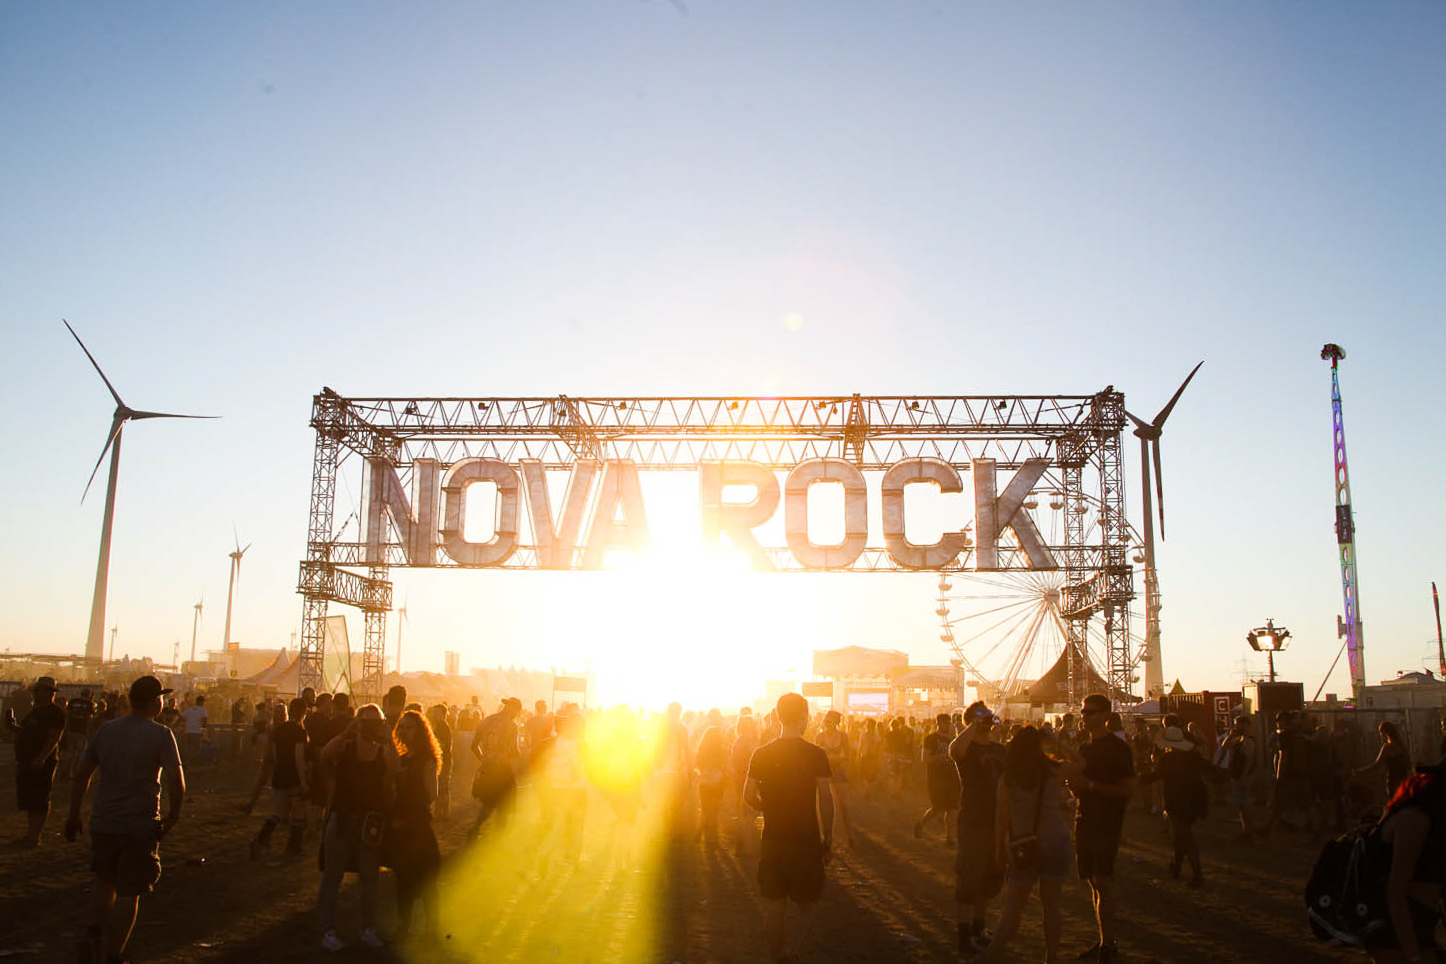 Best Of Nova Rock Festival 2017 - Day 1